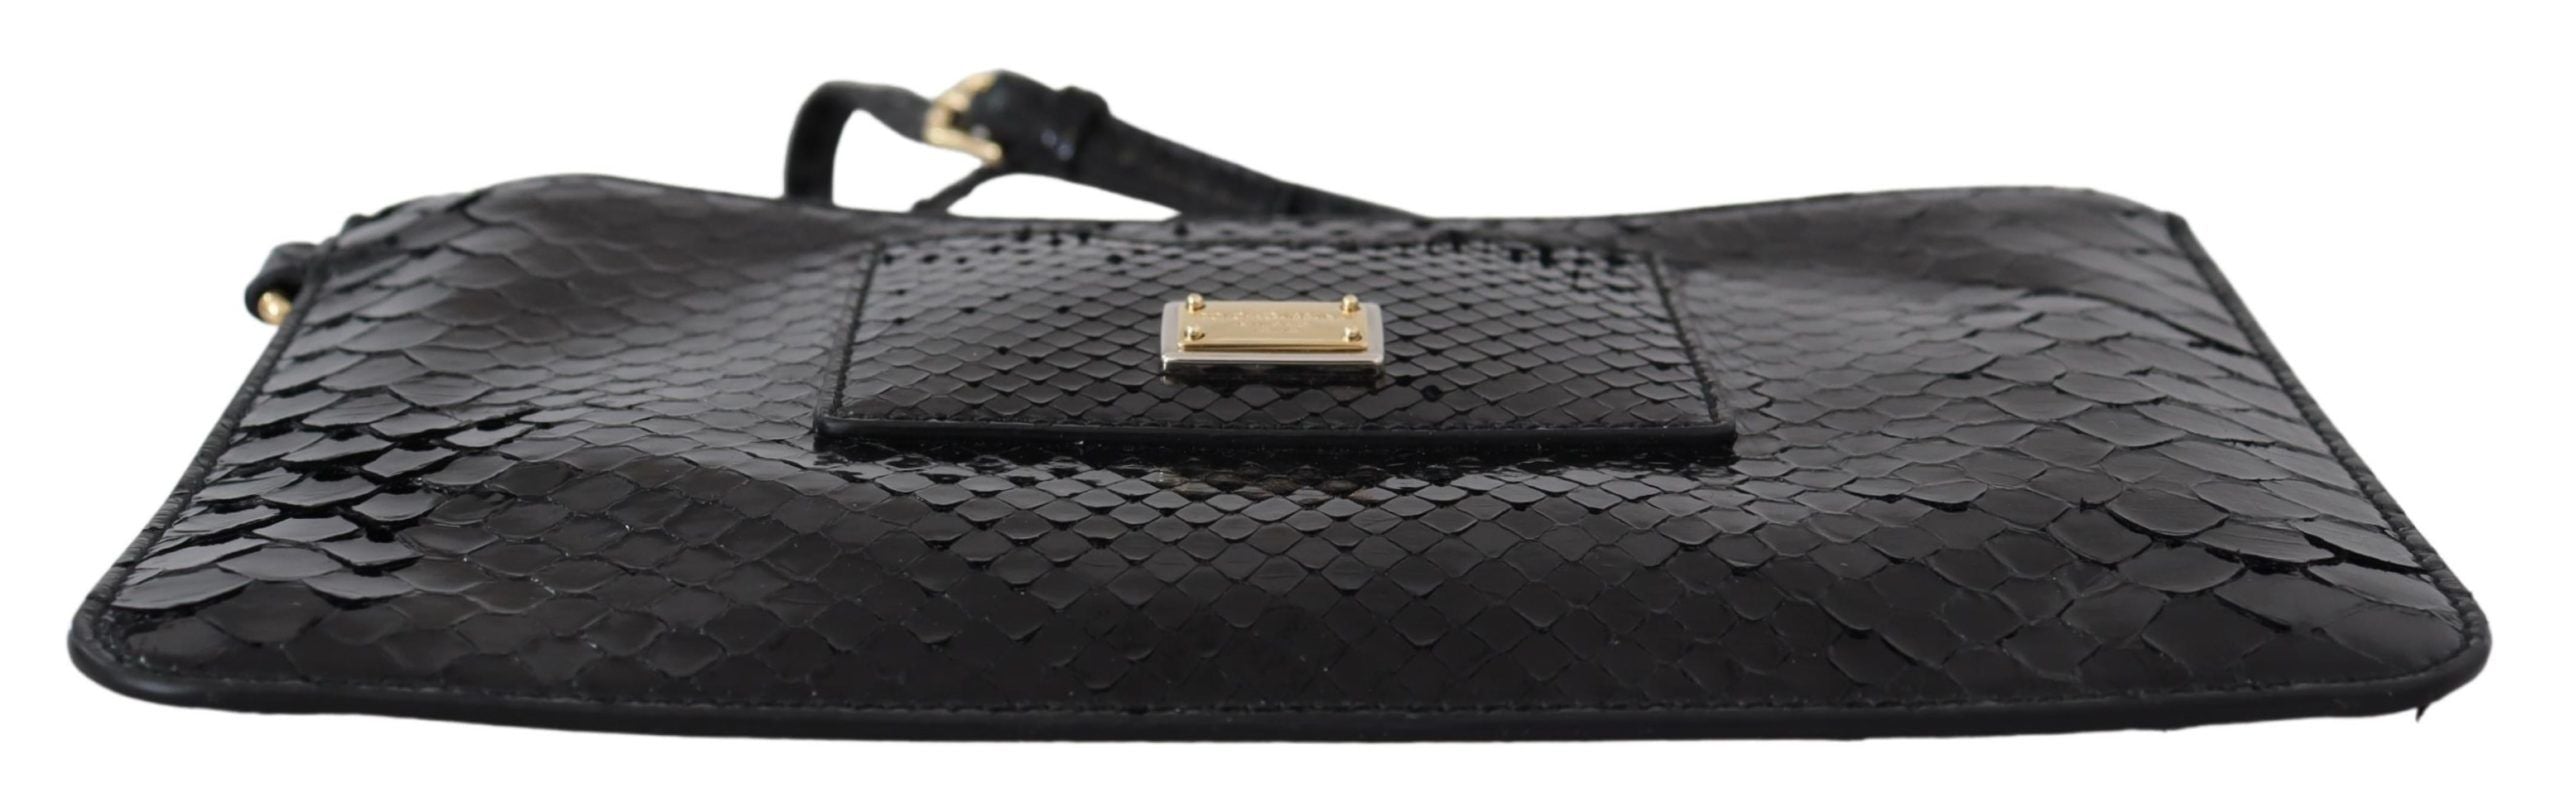 Dolce & Gabbana Exotic Leather Black Wristlet Wallet